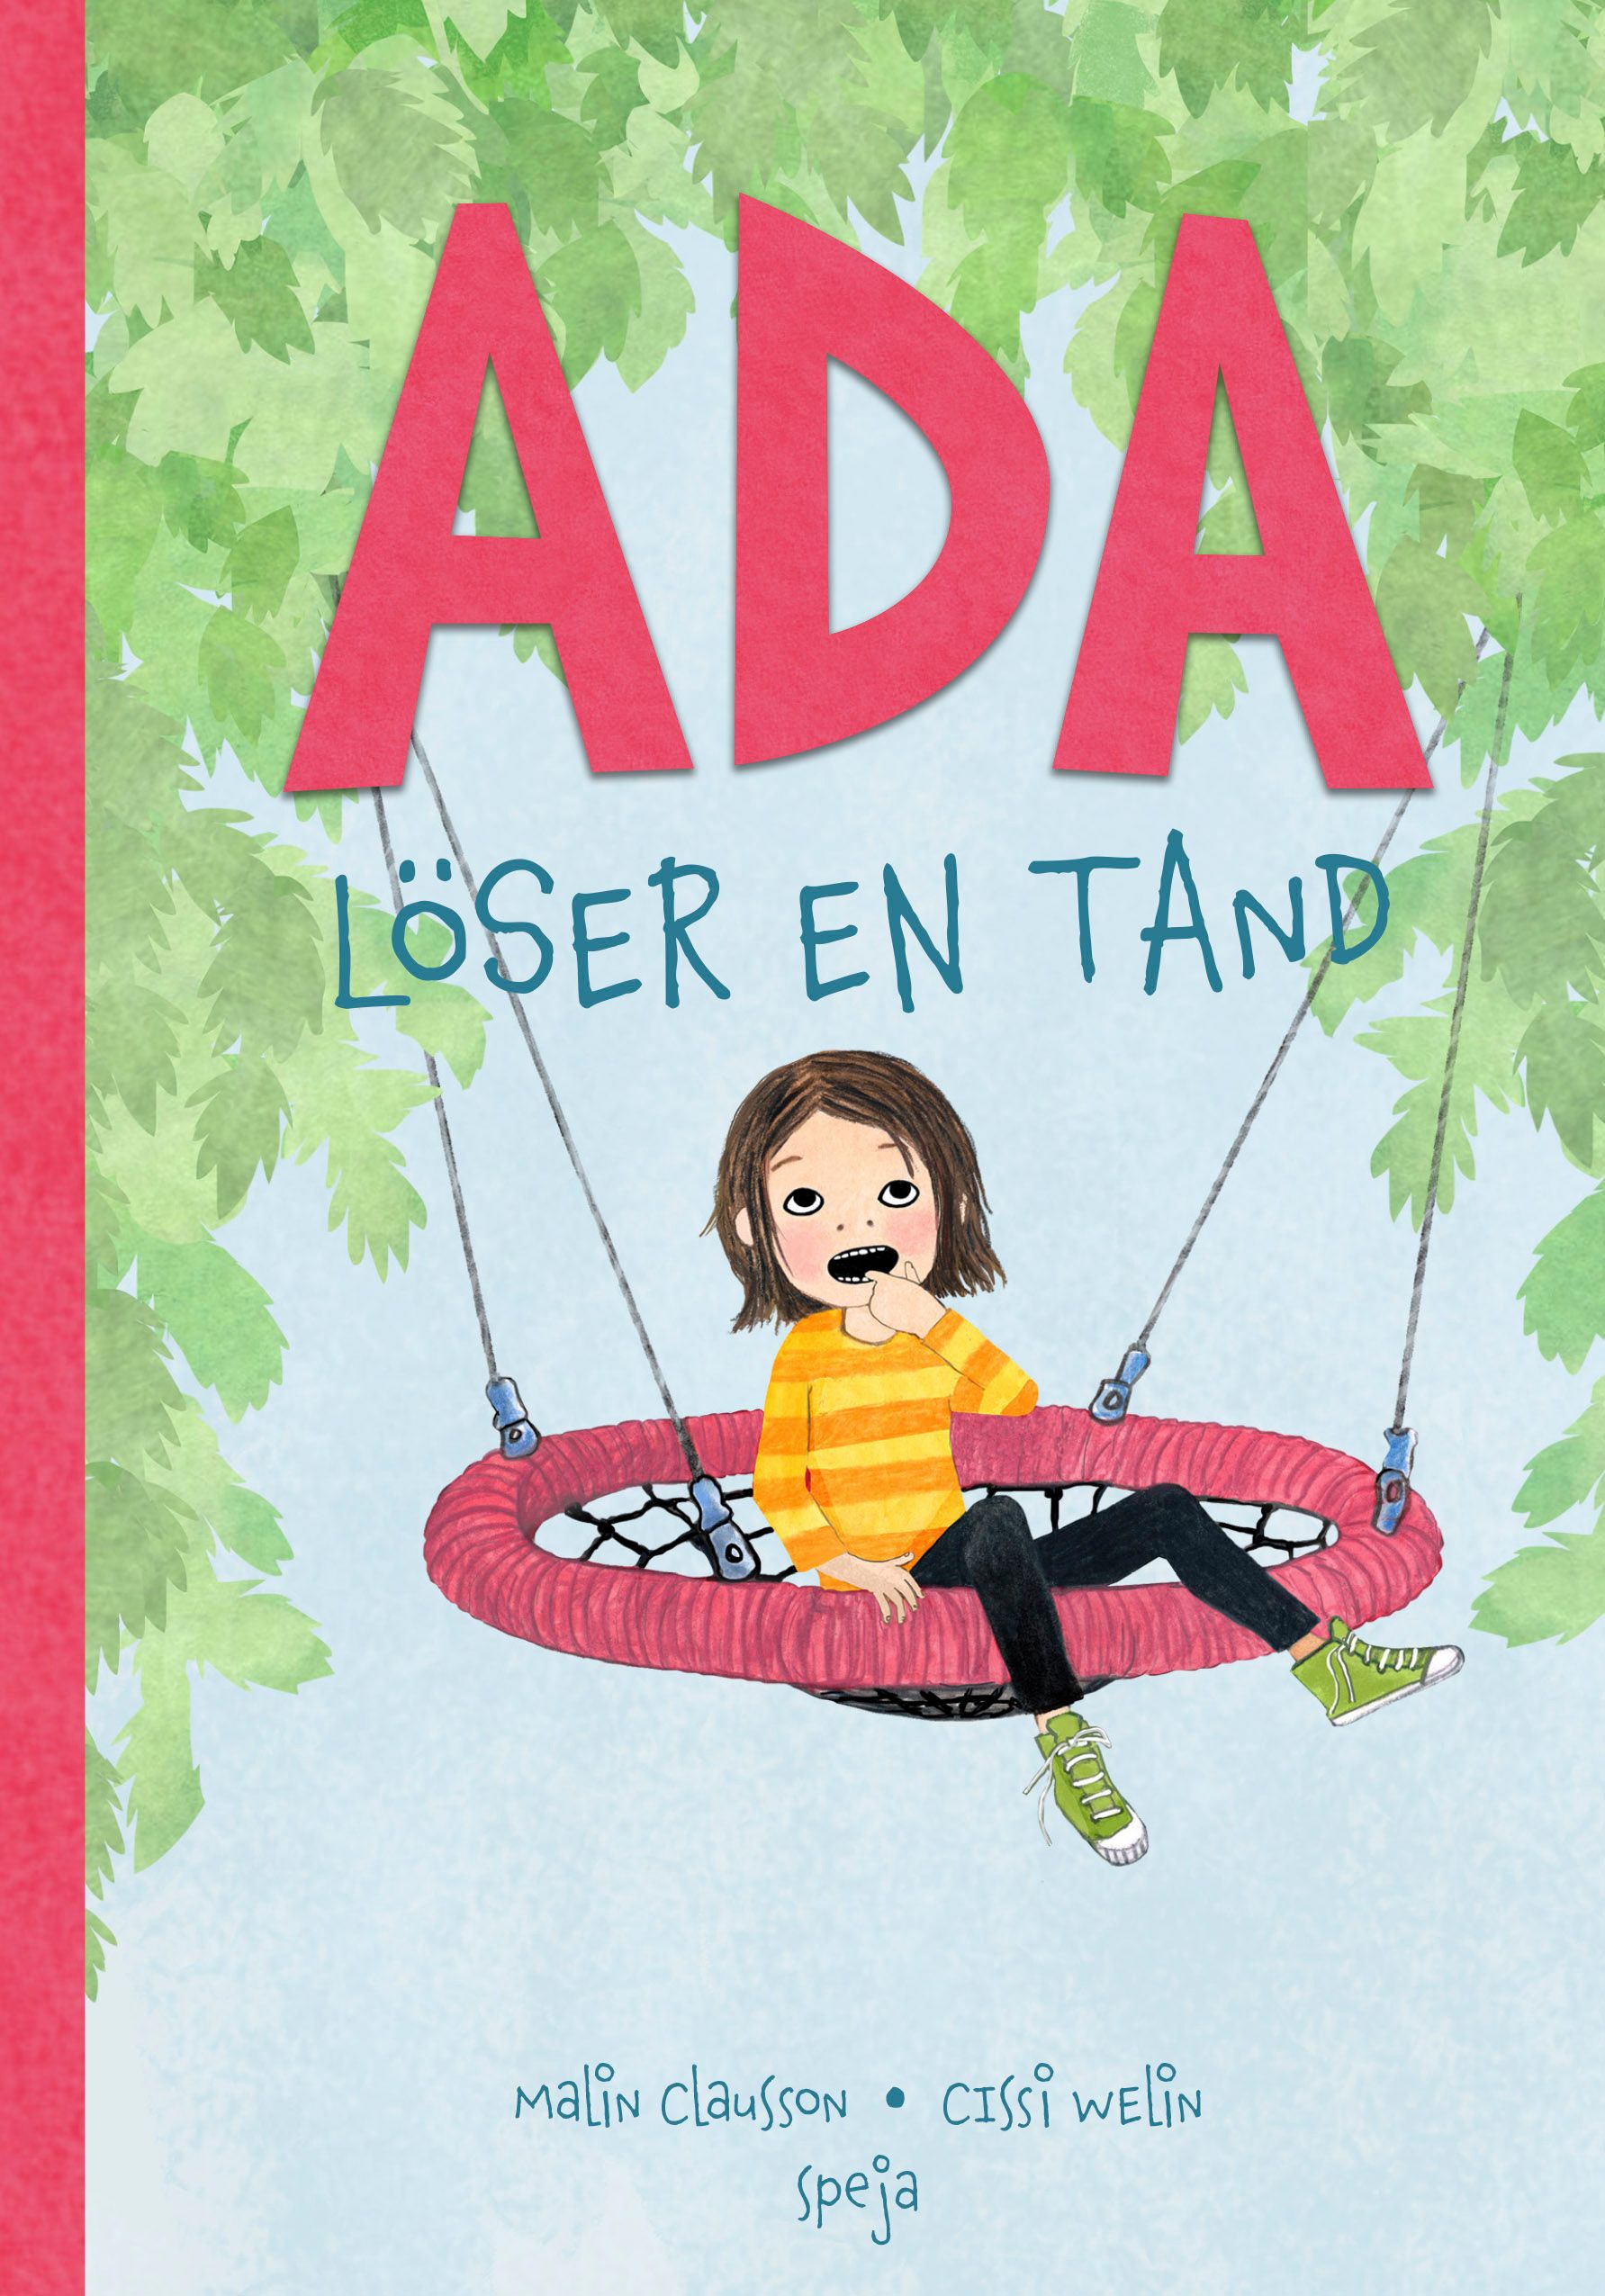 Ada löser en tand, audiobook by Malin Clausson